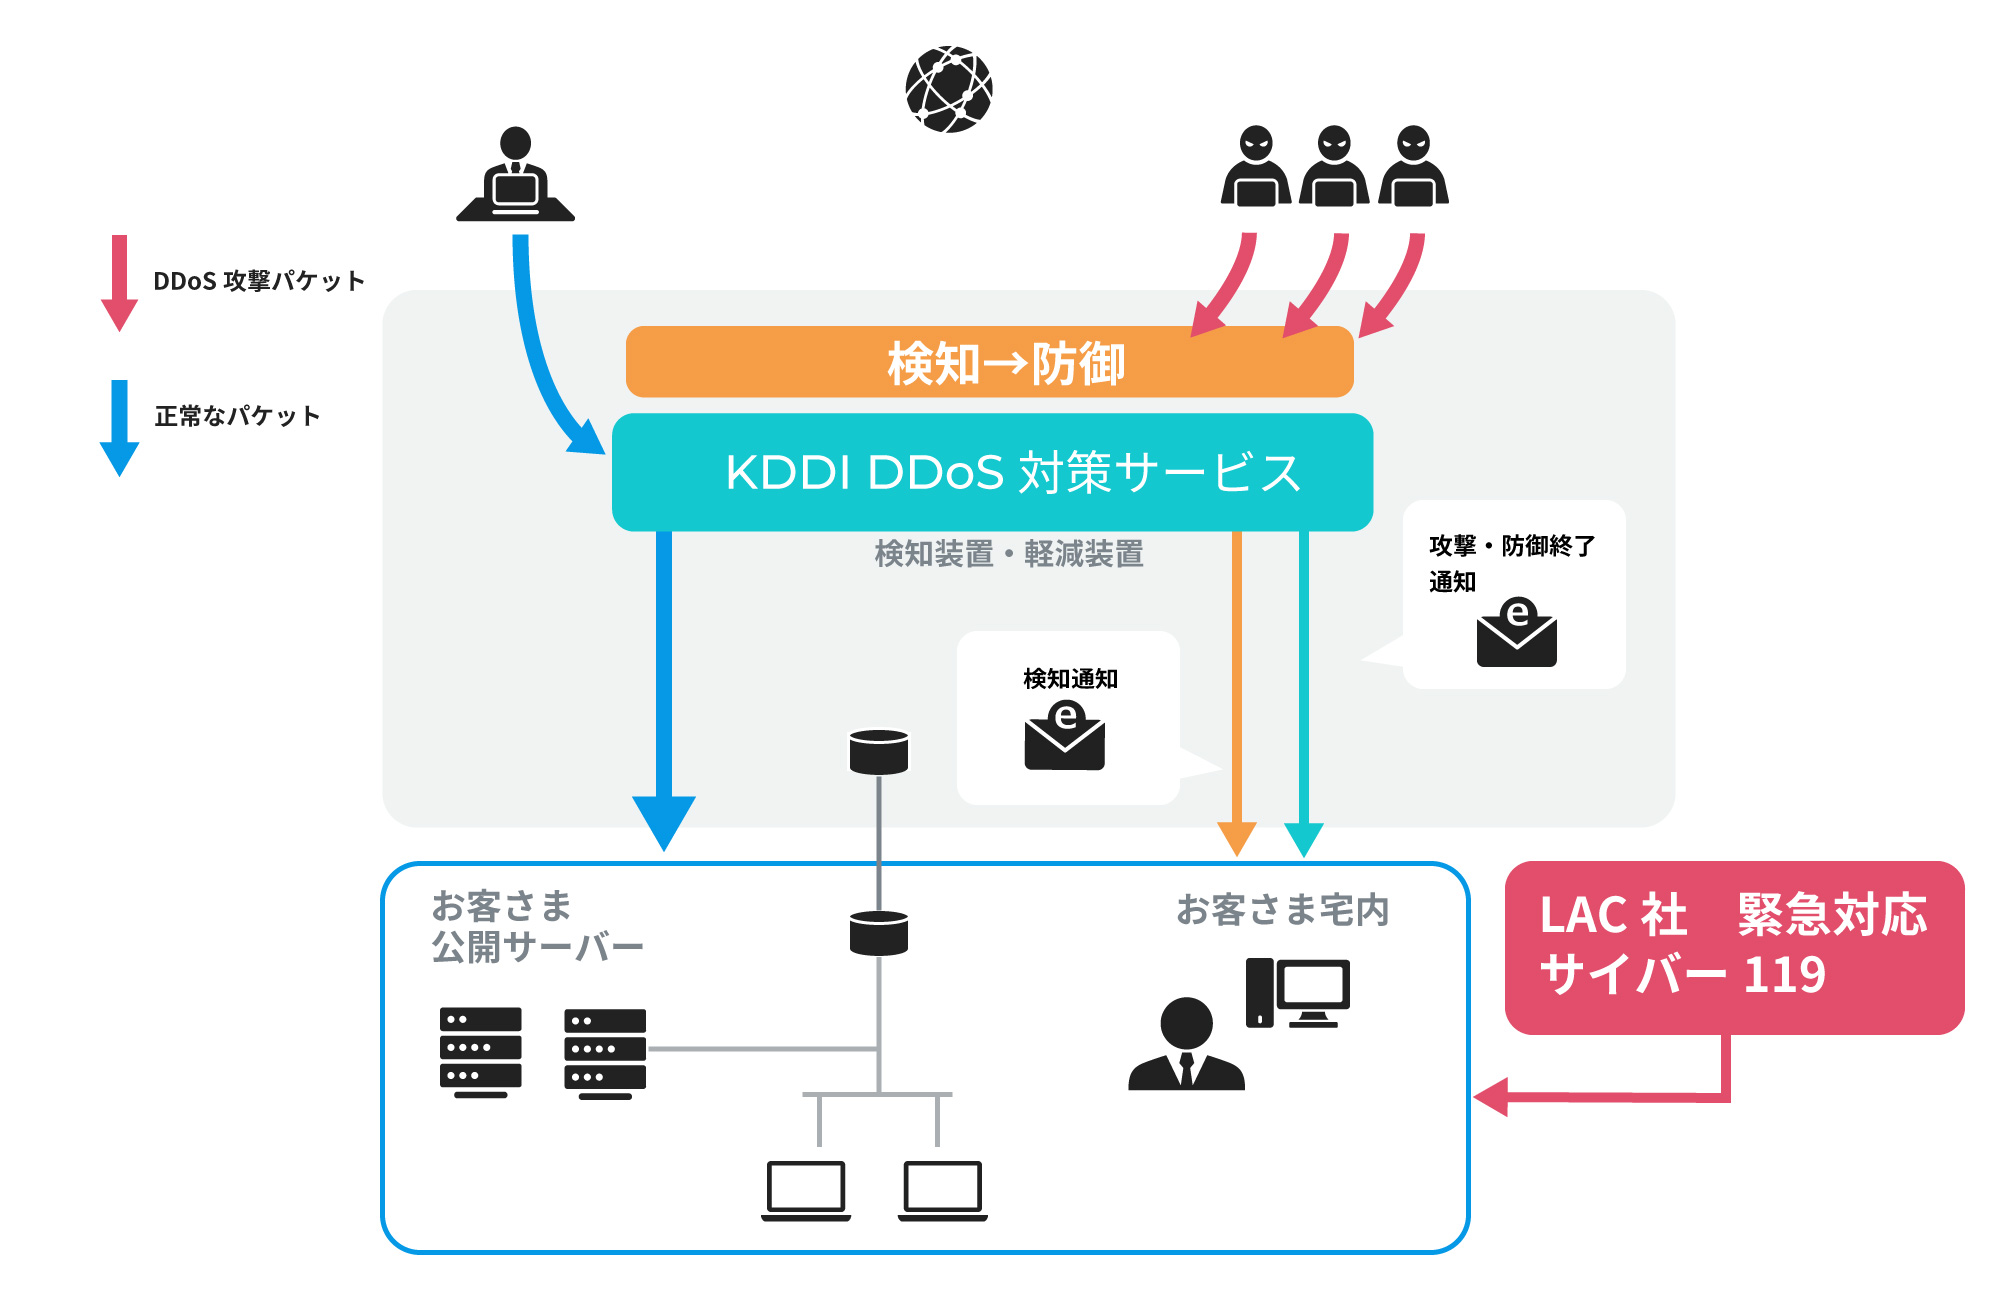 「KDDI DDoS対策サービス」とは…DDoS攻撃パケットを防御し、攻撃・防御終了をお客さまへ通知します。LAC社 緊急対応 サイバー119もご利用いただけます。